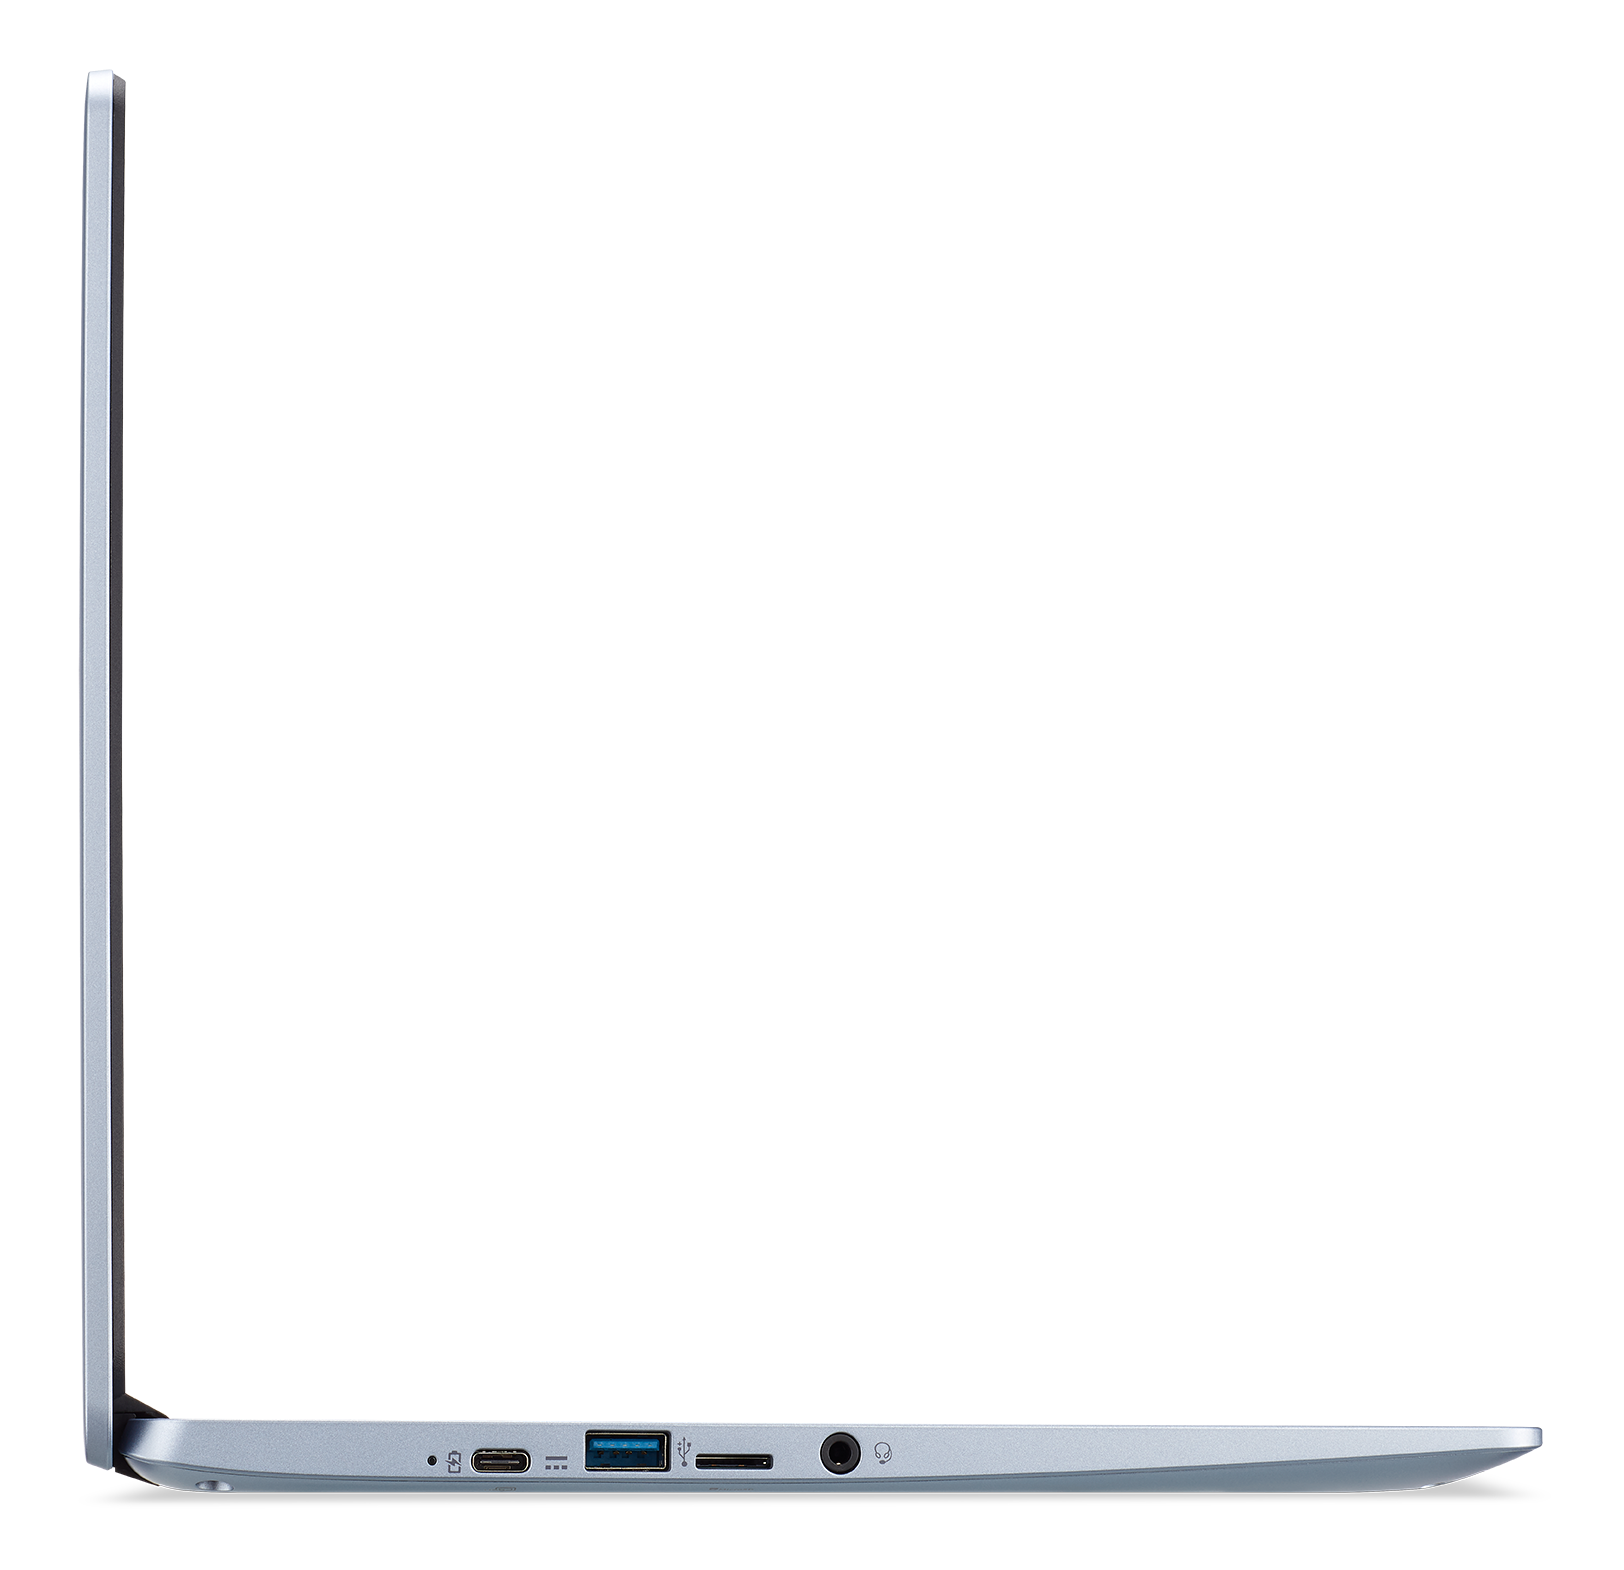 Acer Chromebook 314 14" Touchscreen Laptop, Intel Celeron N4020, 4GB RAM, 32GB HD, Chrome OS, Silver, CB314-1HT-C934 - image 5 of 5